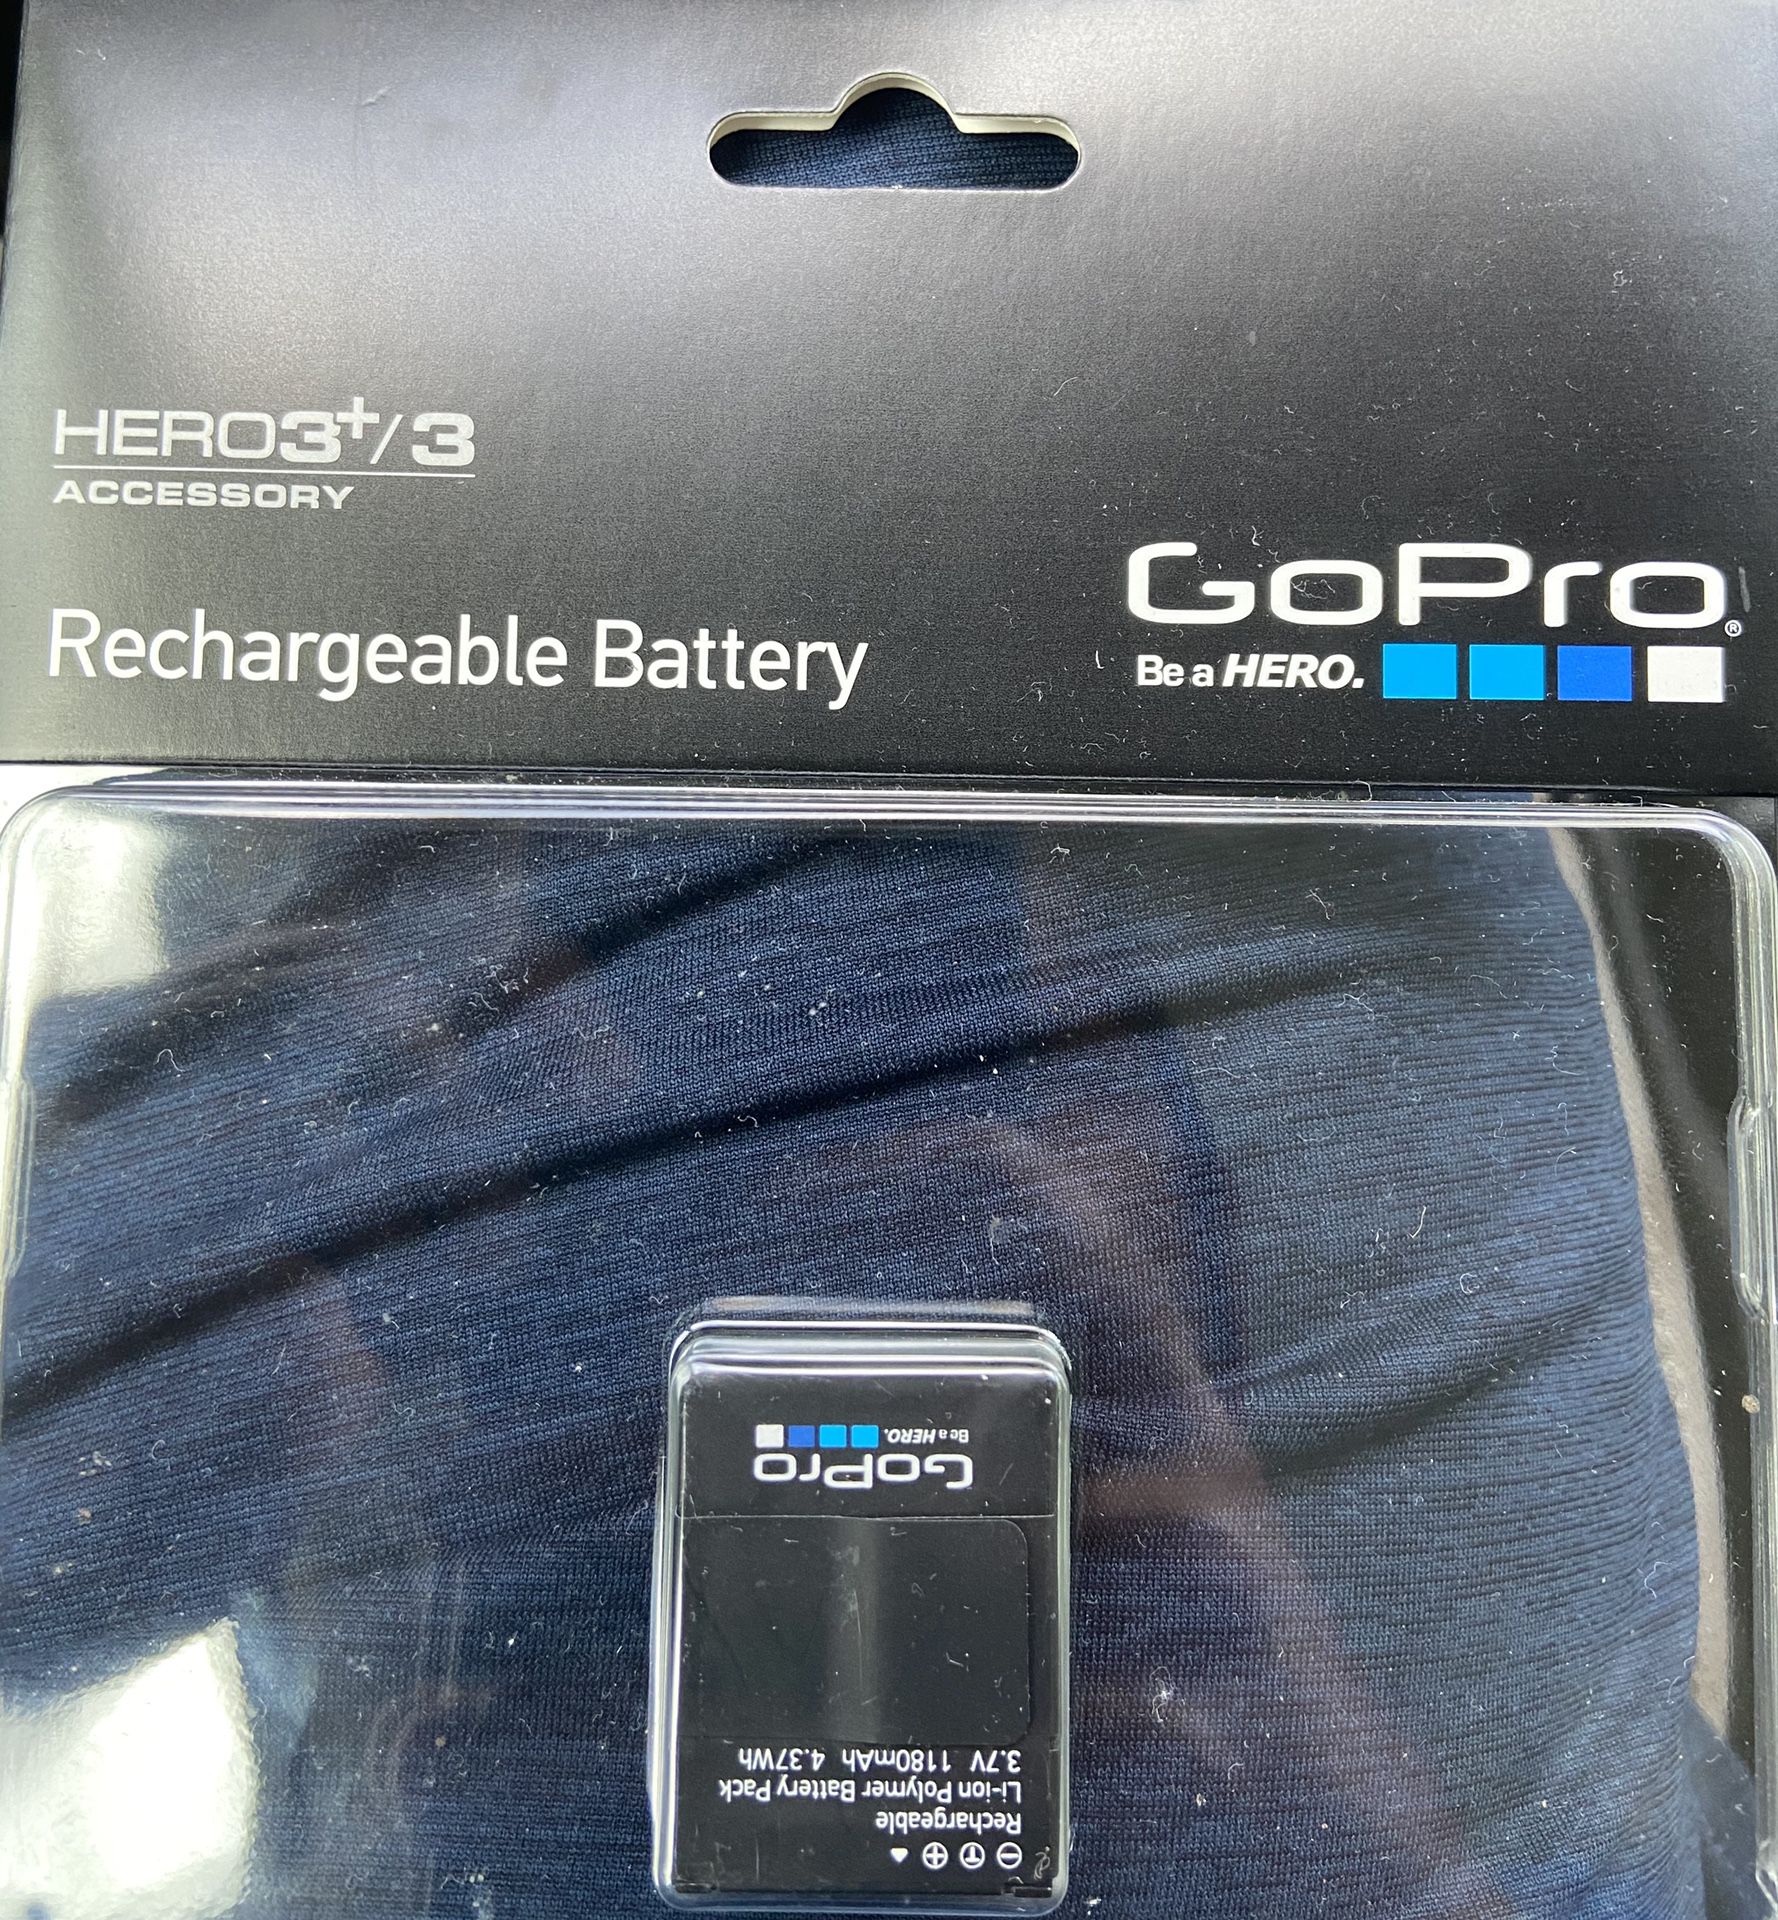 Rechargeable battery GoPro Hero 3+